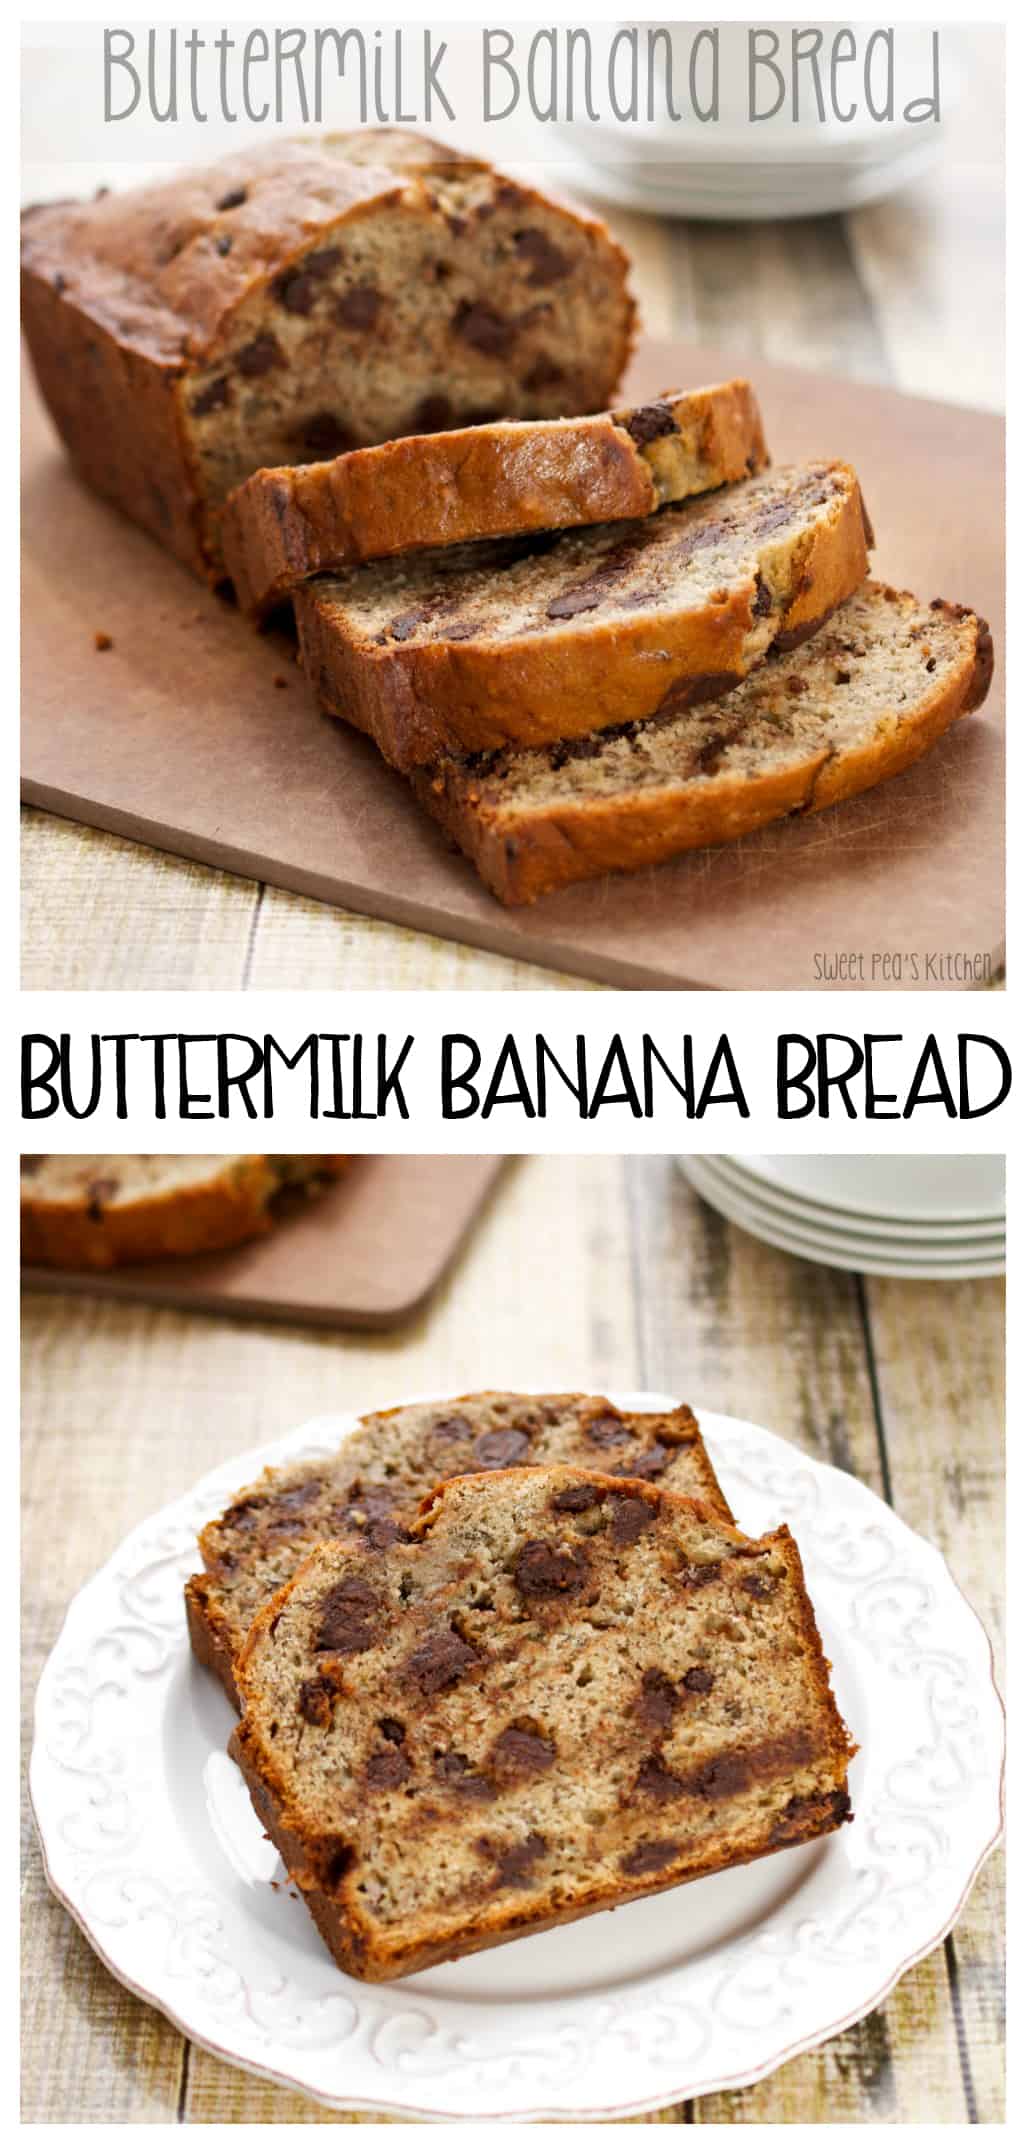 Buttermilk Banana Bread